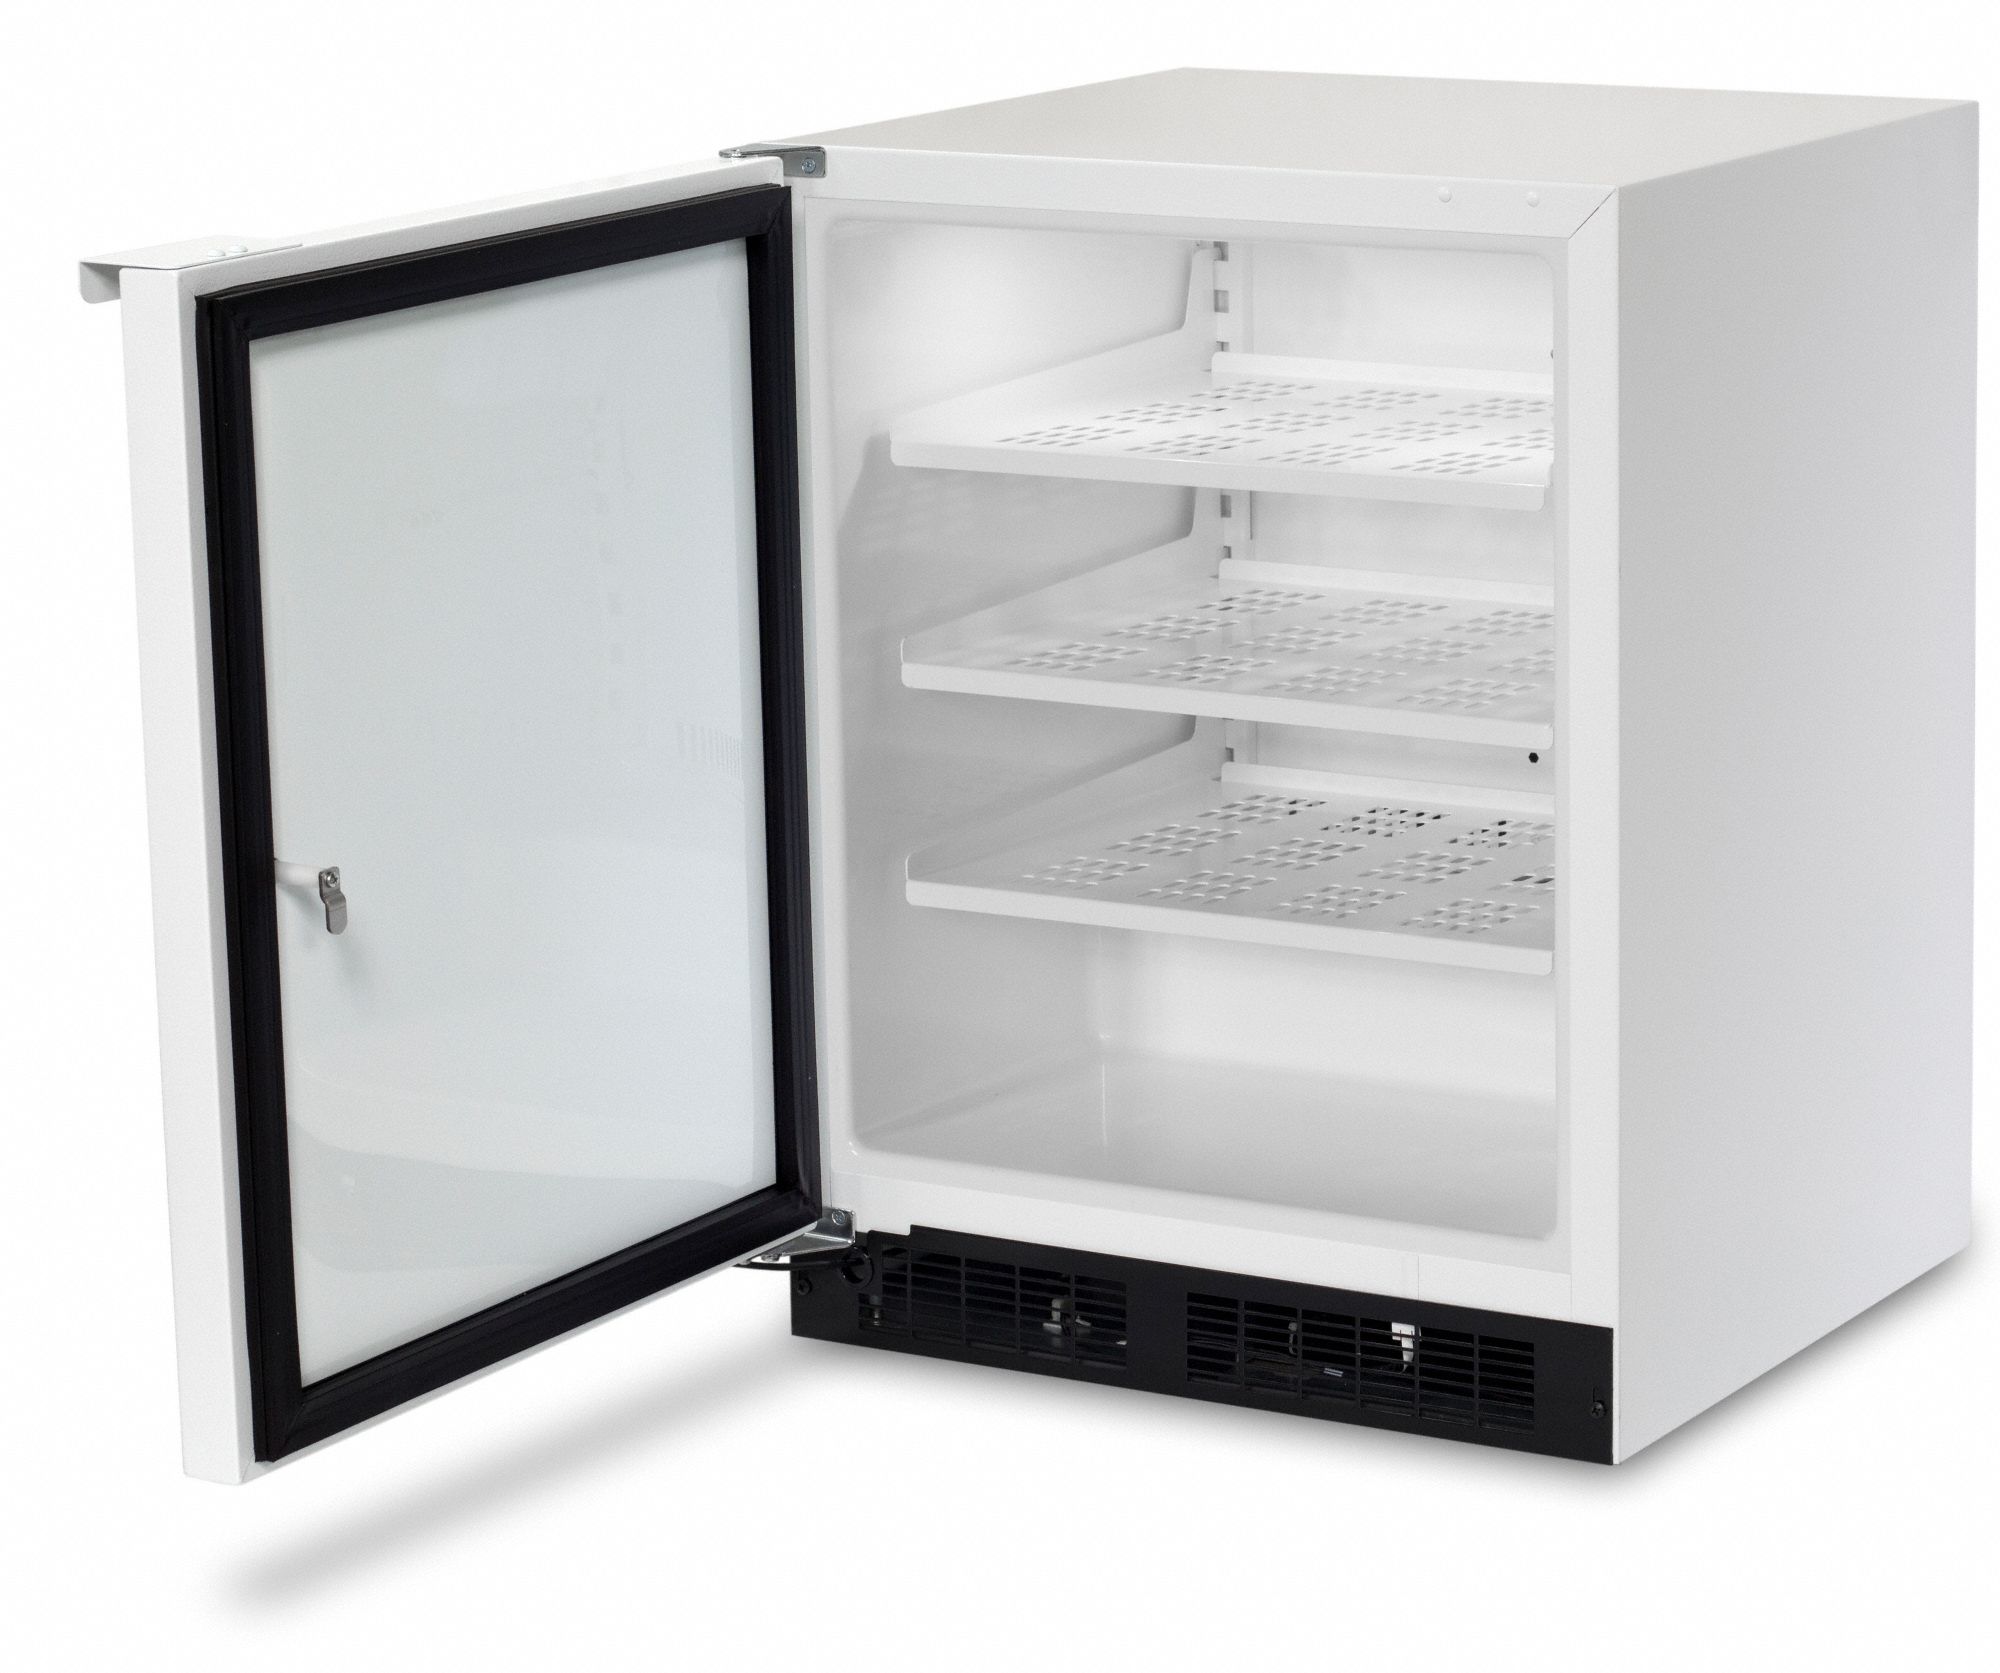 Refrigerator,4.6 cu. ft.,White,Left